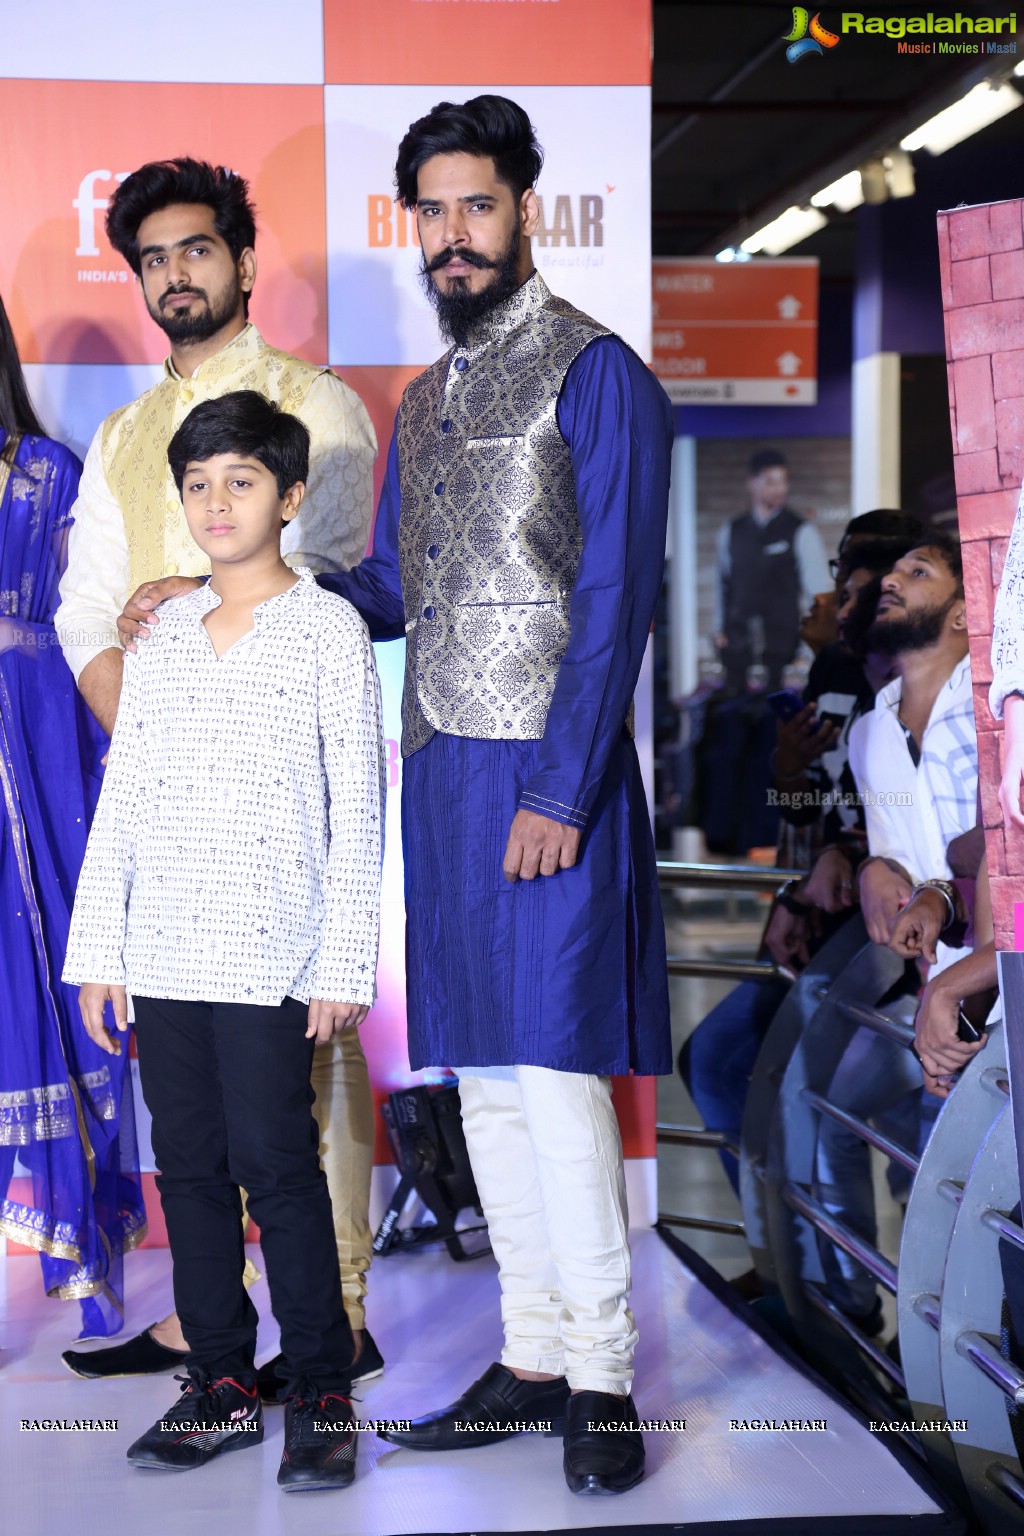 Aditi Rao Hydari unveils fbb’s Ugadi collection at Big Bazaar Ameerpet, Hyderabad